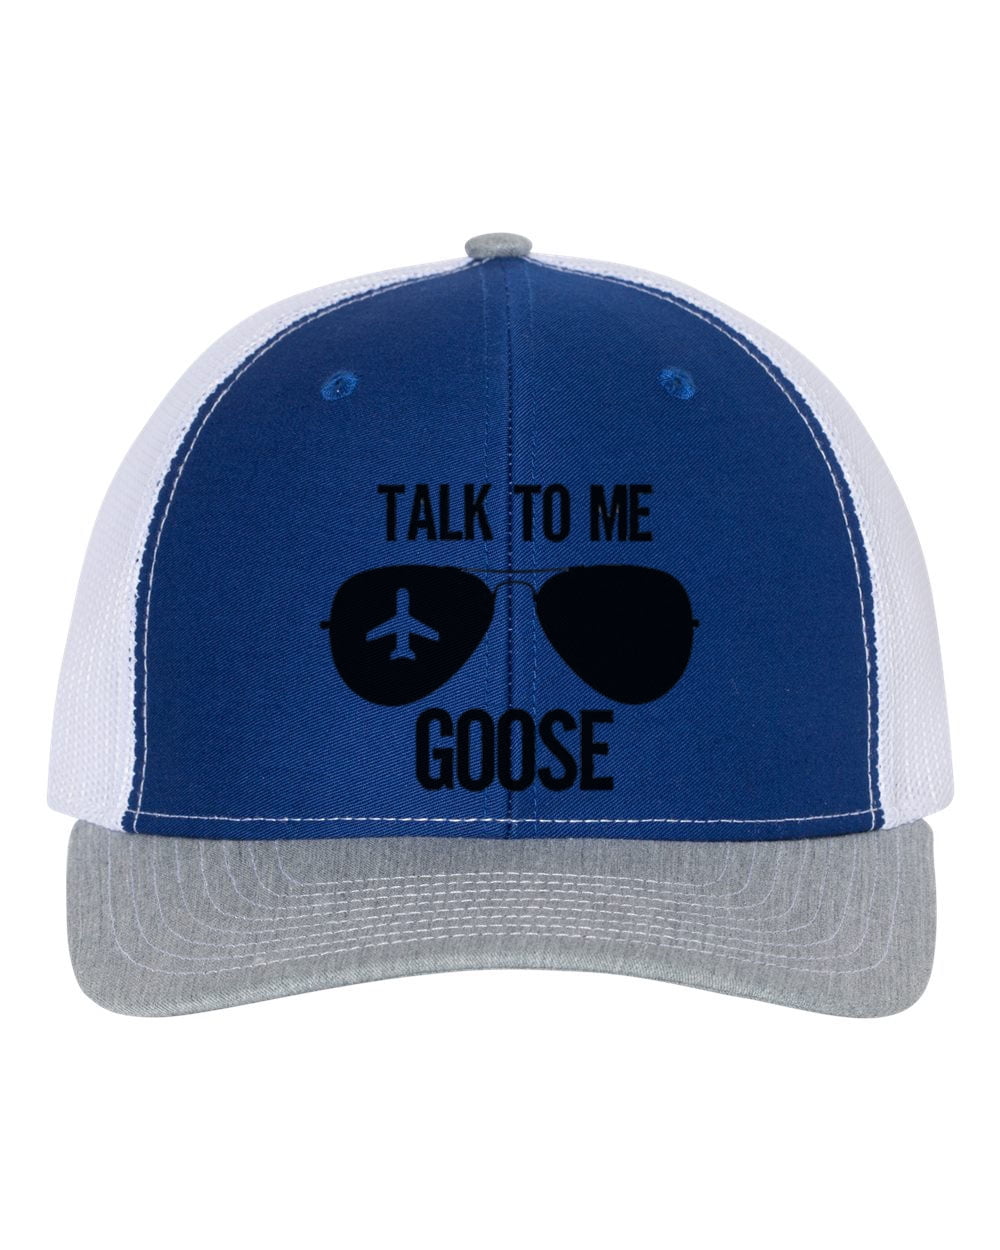 Top Gun Hat, Talk To Me Goose, Maverick Hat, Trucker Hat, Snapback, Top Gun  Cap, Gift For Him, Adjustable, TopGun Apparel, Black Text,  Navy/White/Heather 